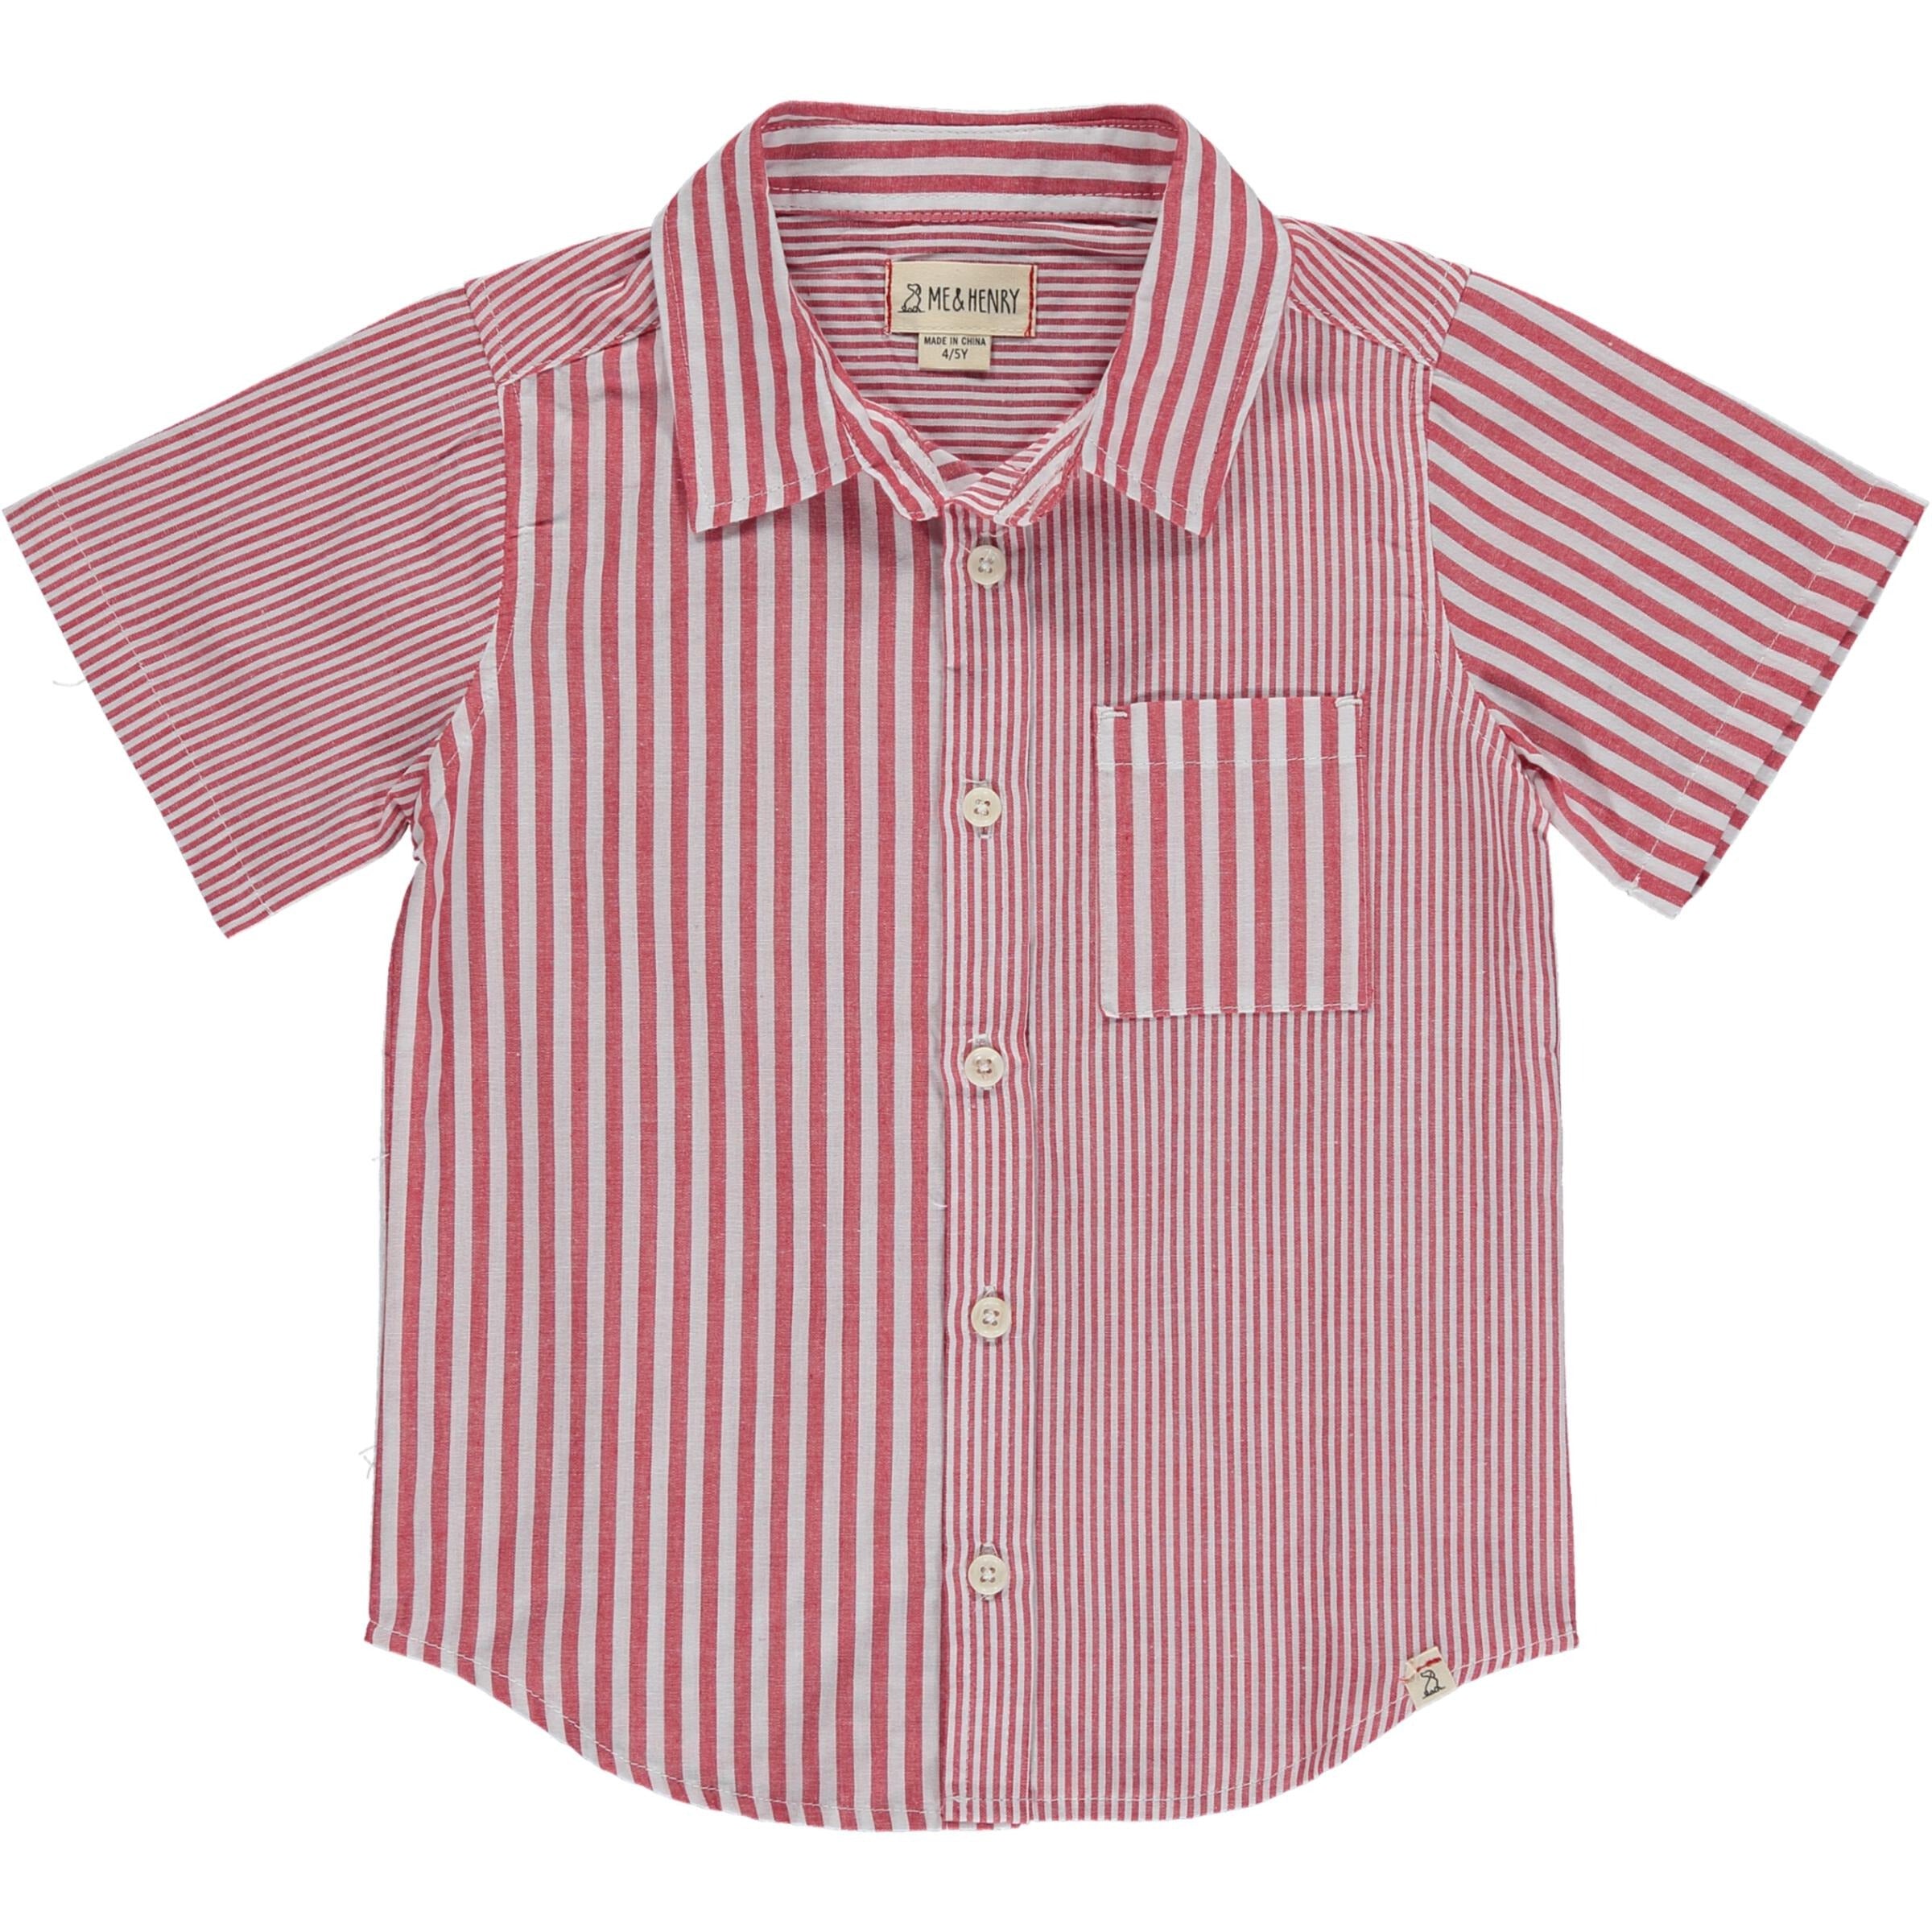 Arthur Shirt - Red/White Stripe